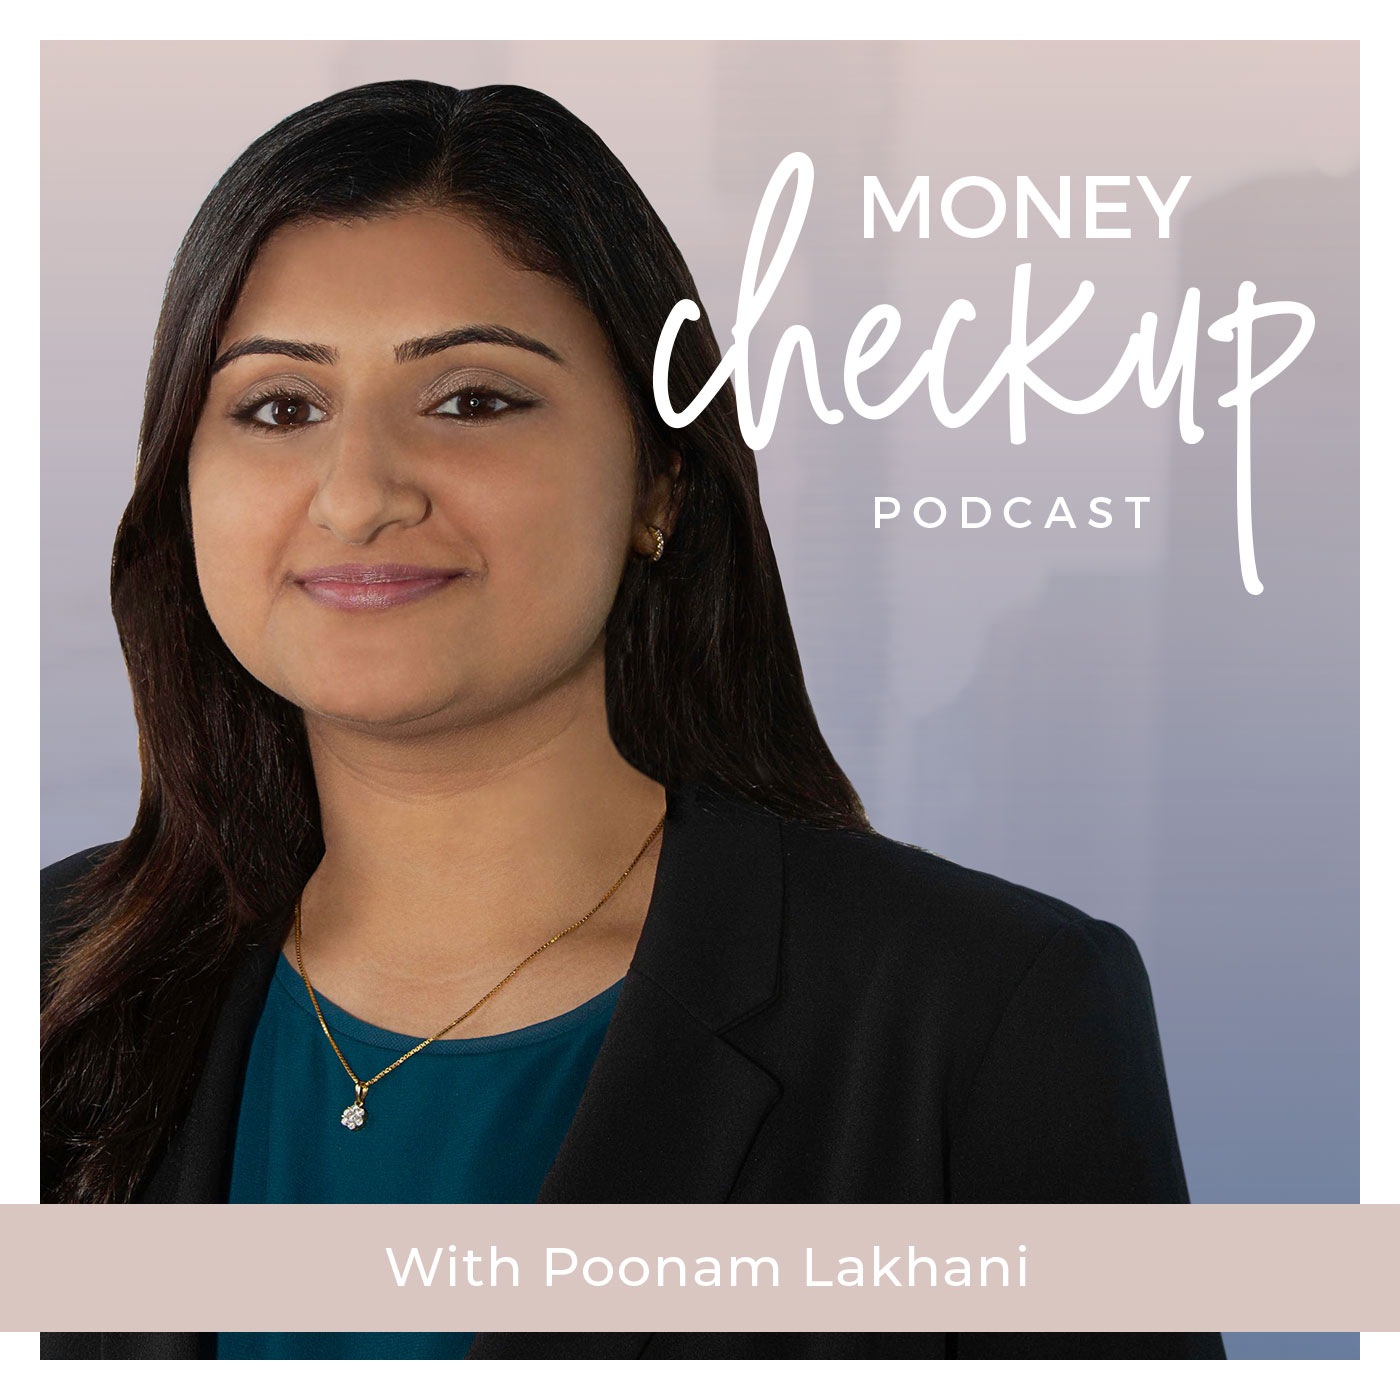 Money Checkup Podcast With Poonam Lakhani